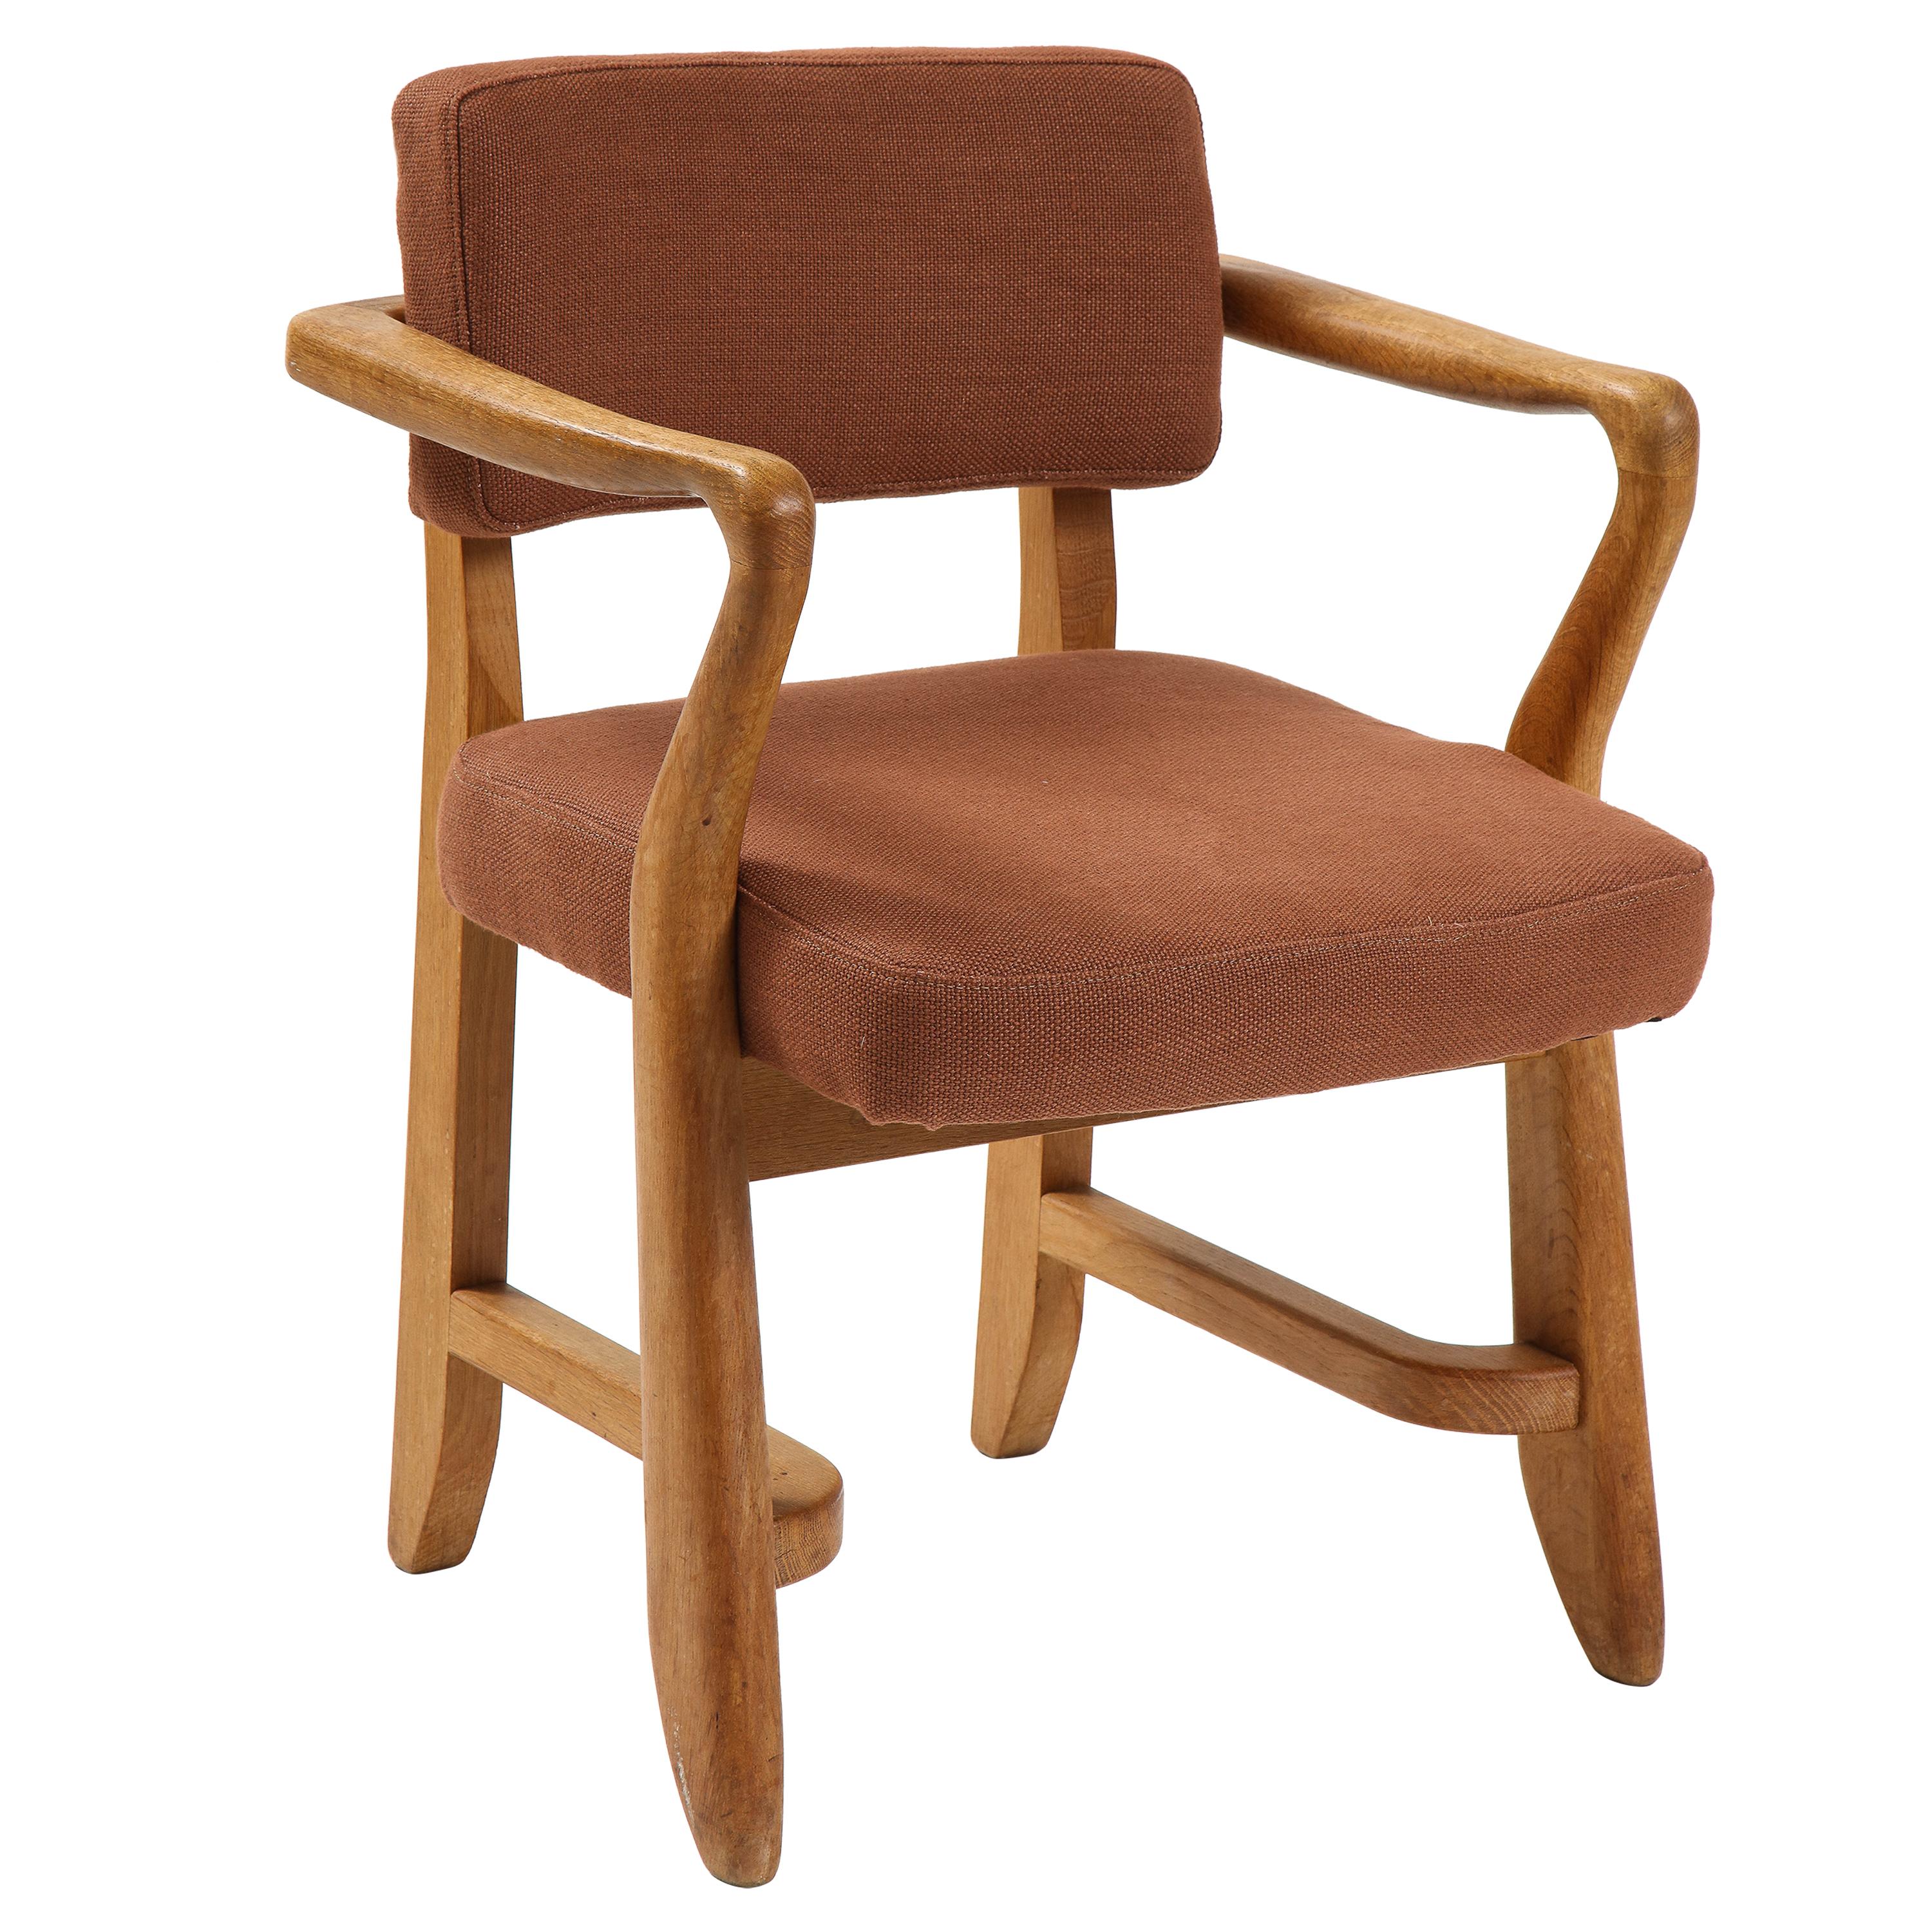 Guillerme et Chambron Linen-Upholstered Oak "Bridge" Chair, France, c. 1970s